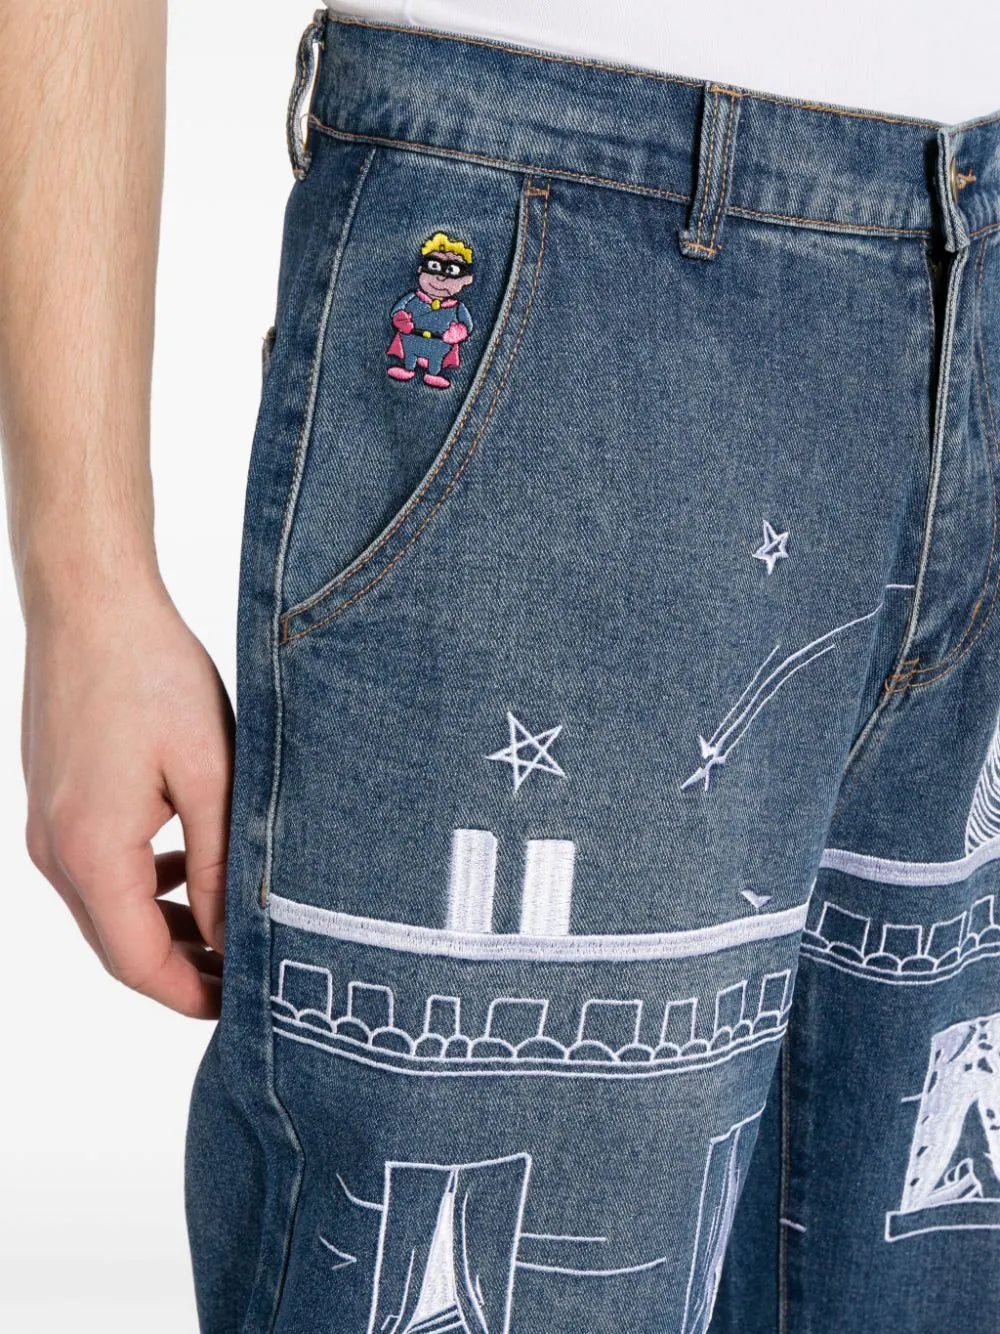 Shop Kidsuper Fire Escape Embroidered Straight-leg Jeans